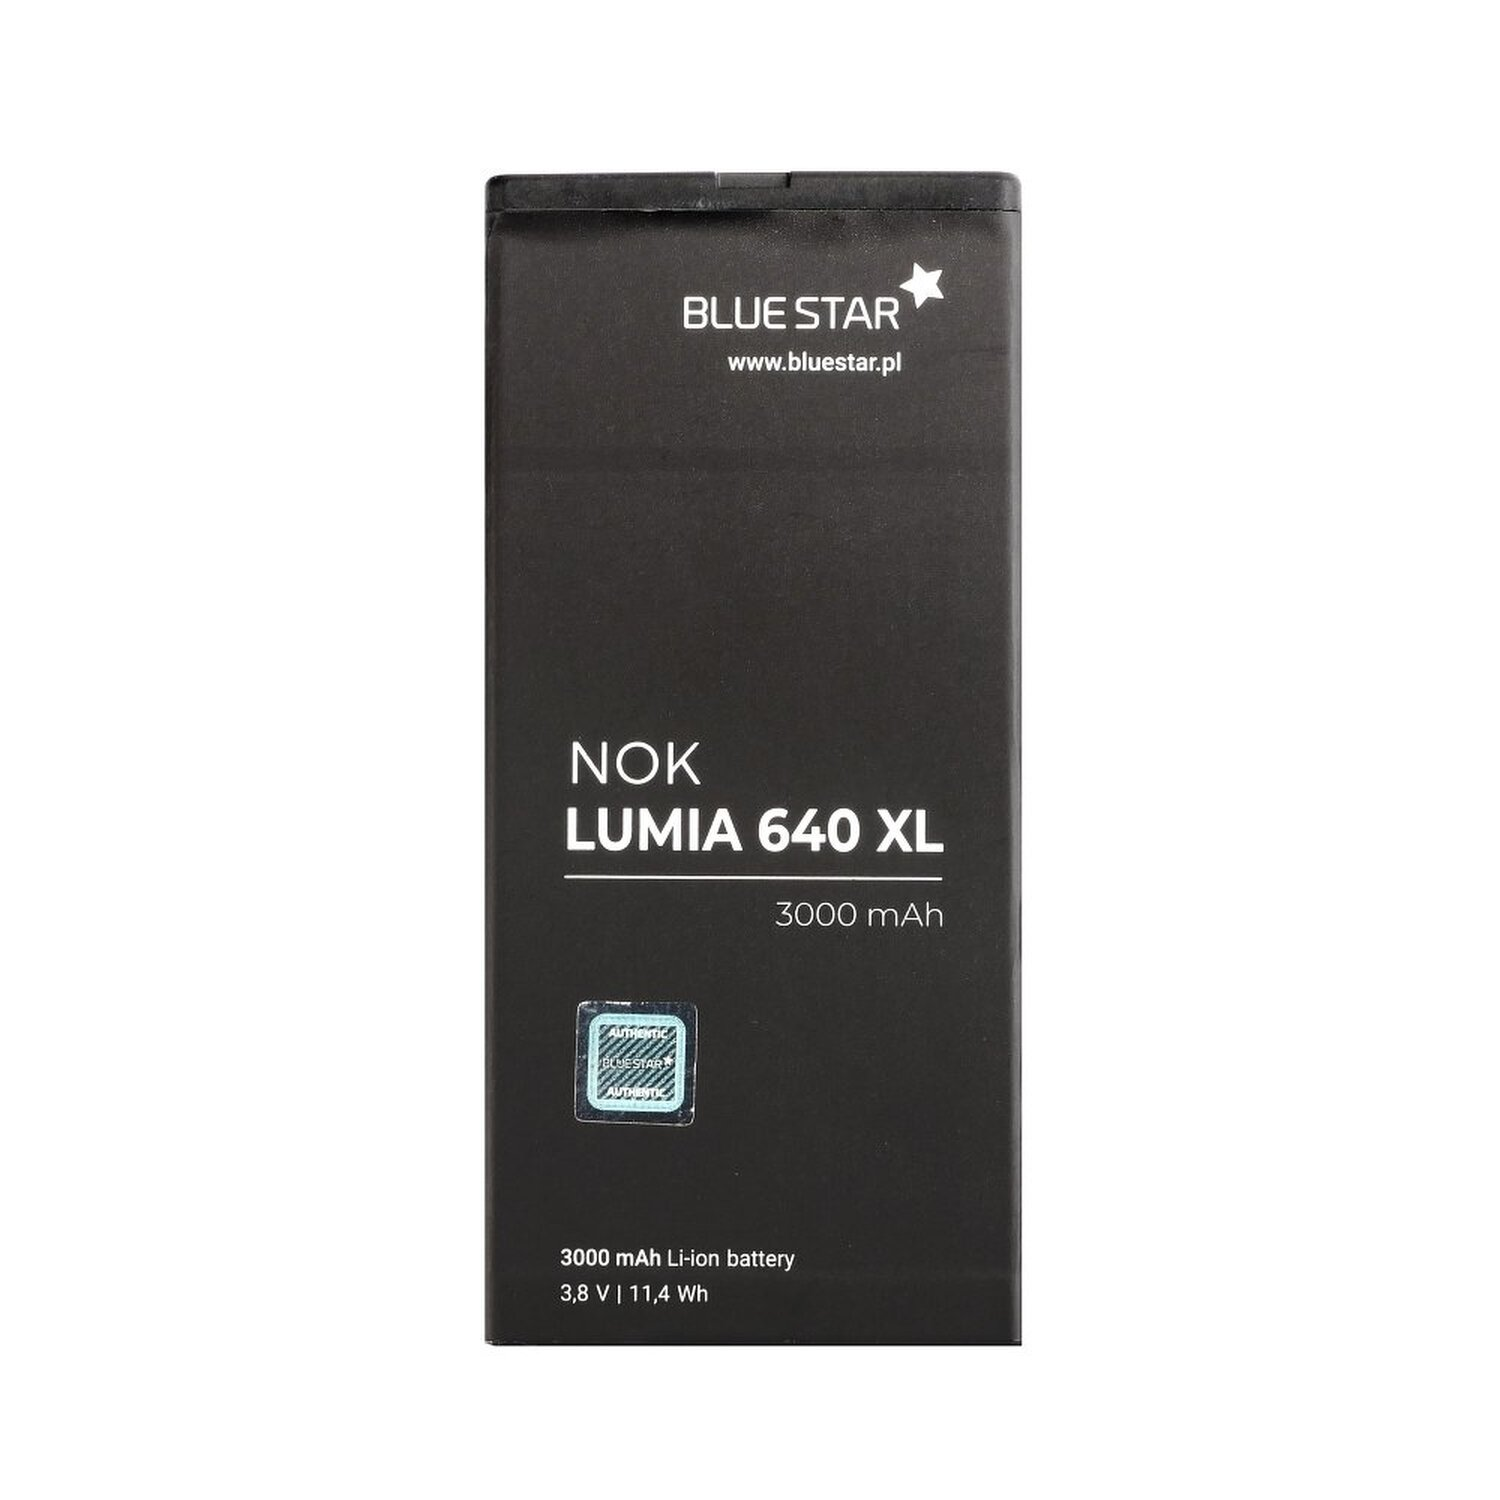 BLUESTAR Akku für Lumia Nokia 640 Handyakku Li-Ion XL